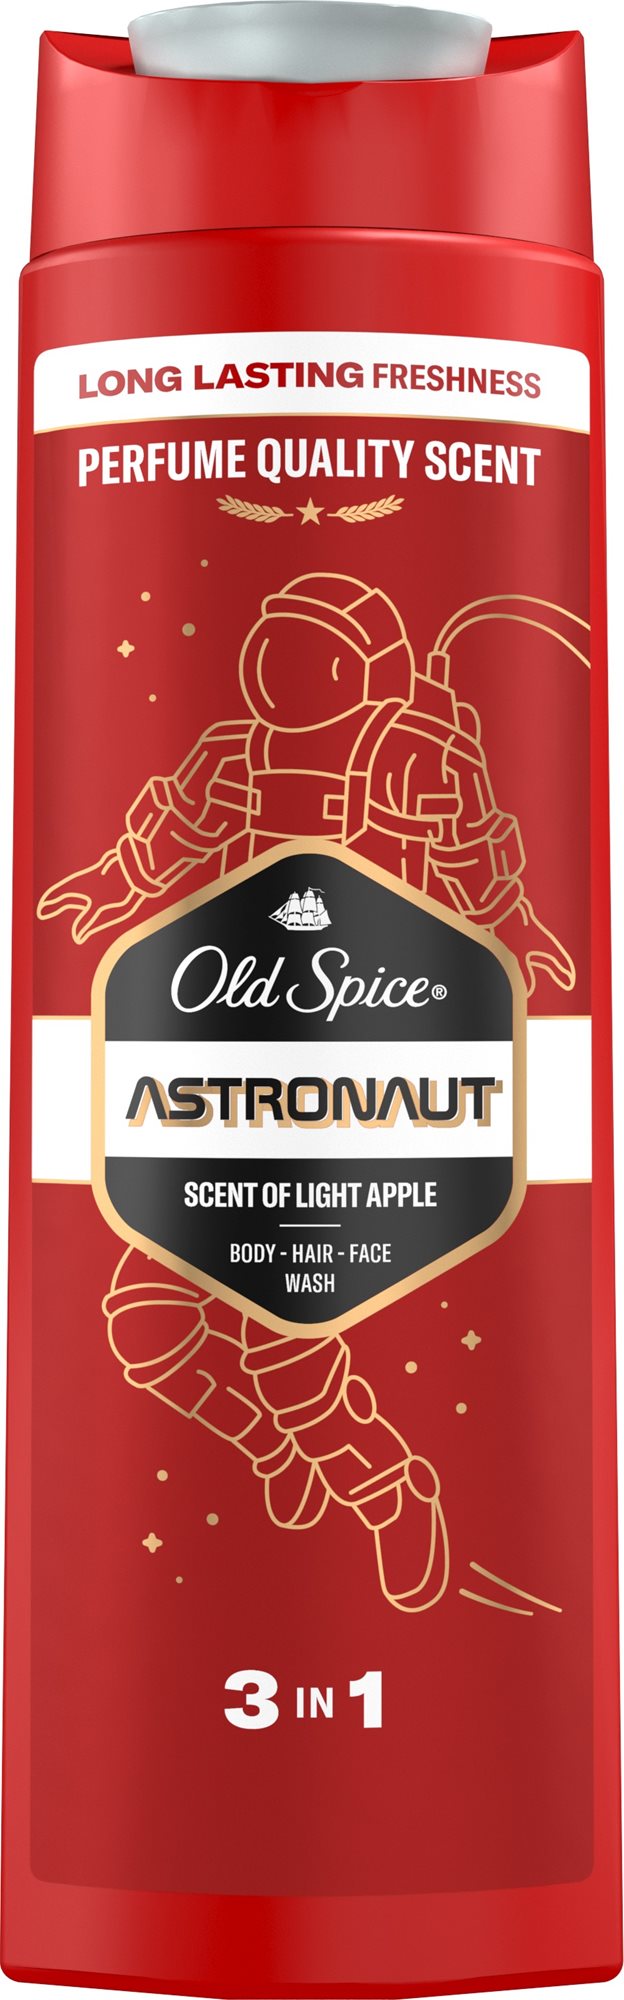 OLD SPICE Astronaut 400 ml